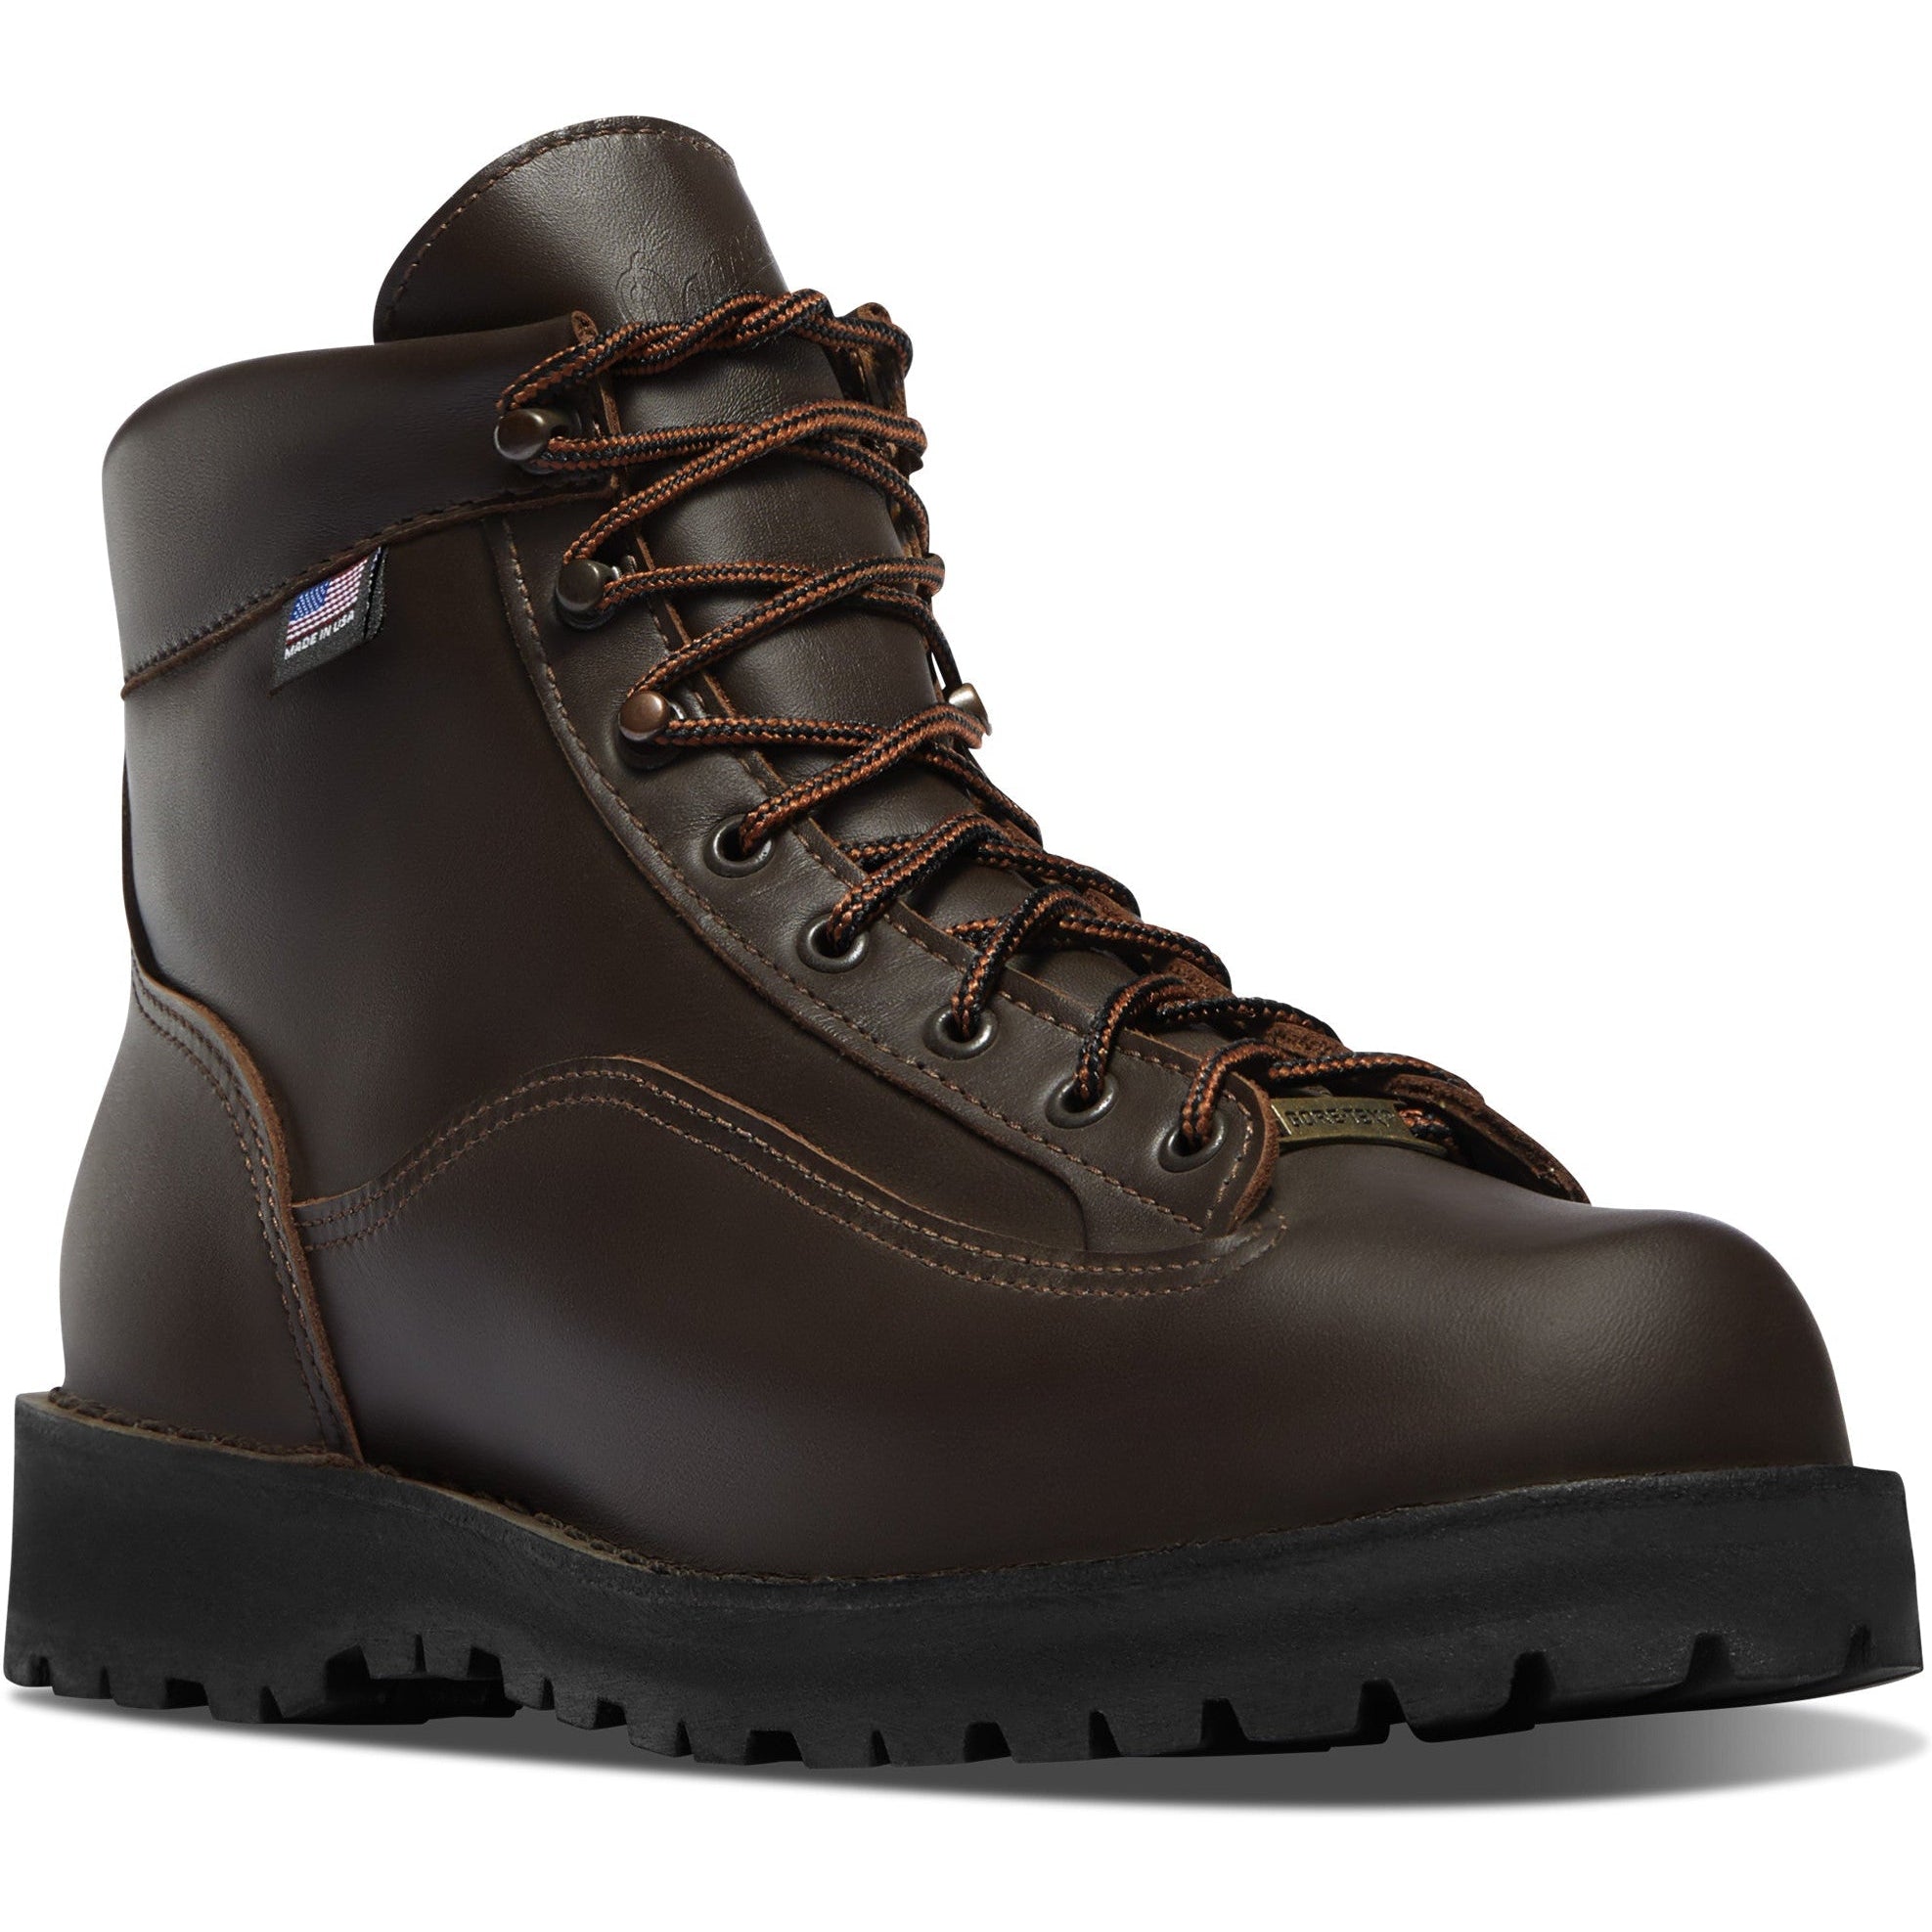 Danner Men's Explorer 6" WP USA Made Hiking Boot - Brown - 45200 6 / Wide / Brown - Overlook Boots